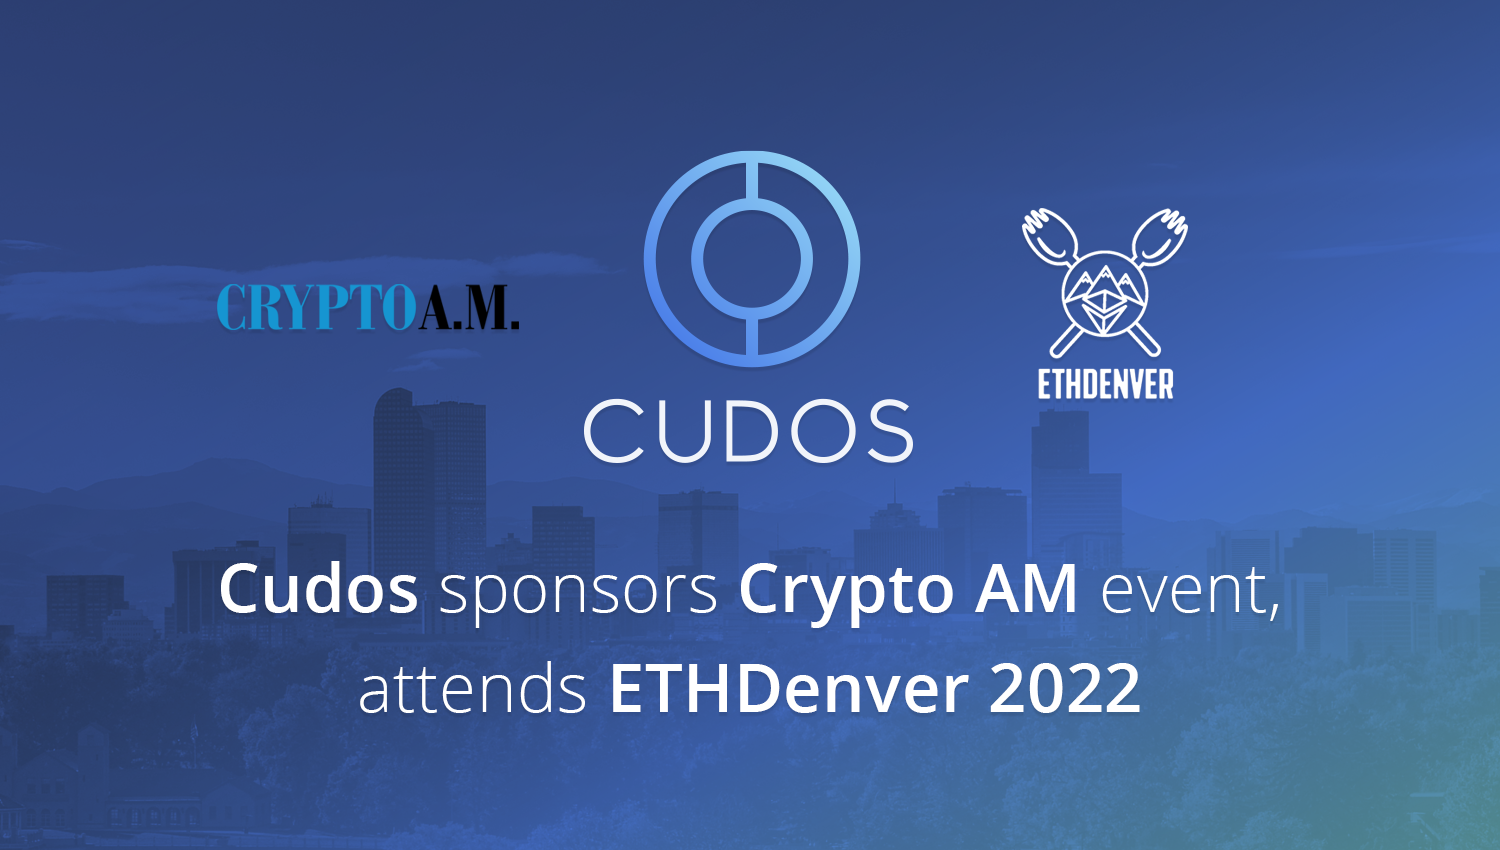 Upcoming events: Cudos sponsors Crypto AM event